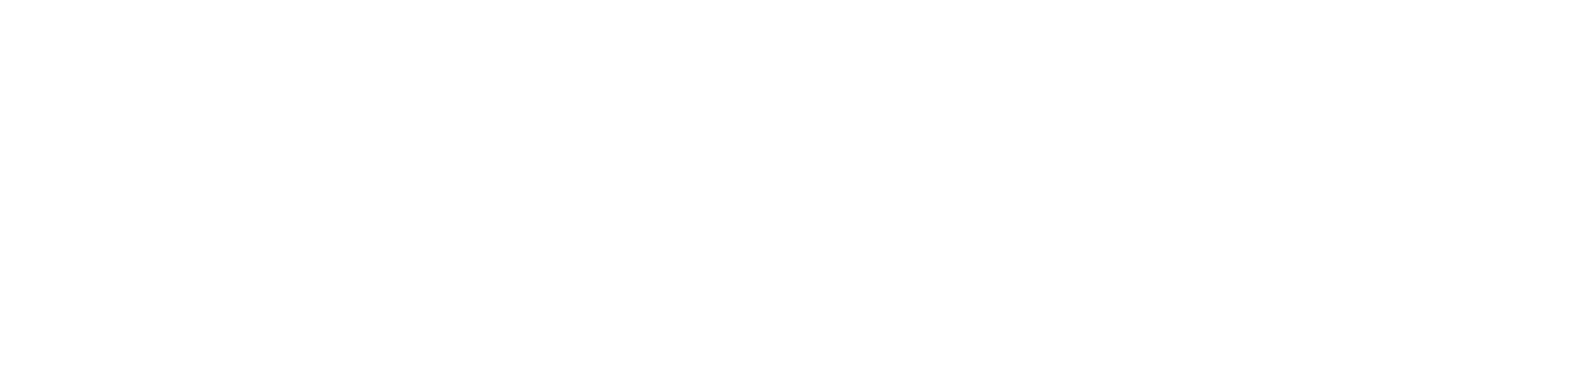 Console Gamer Magazine Logo